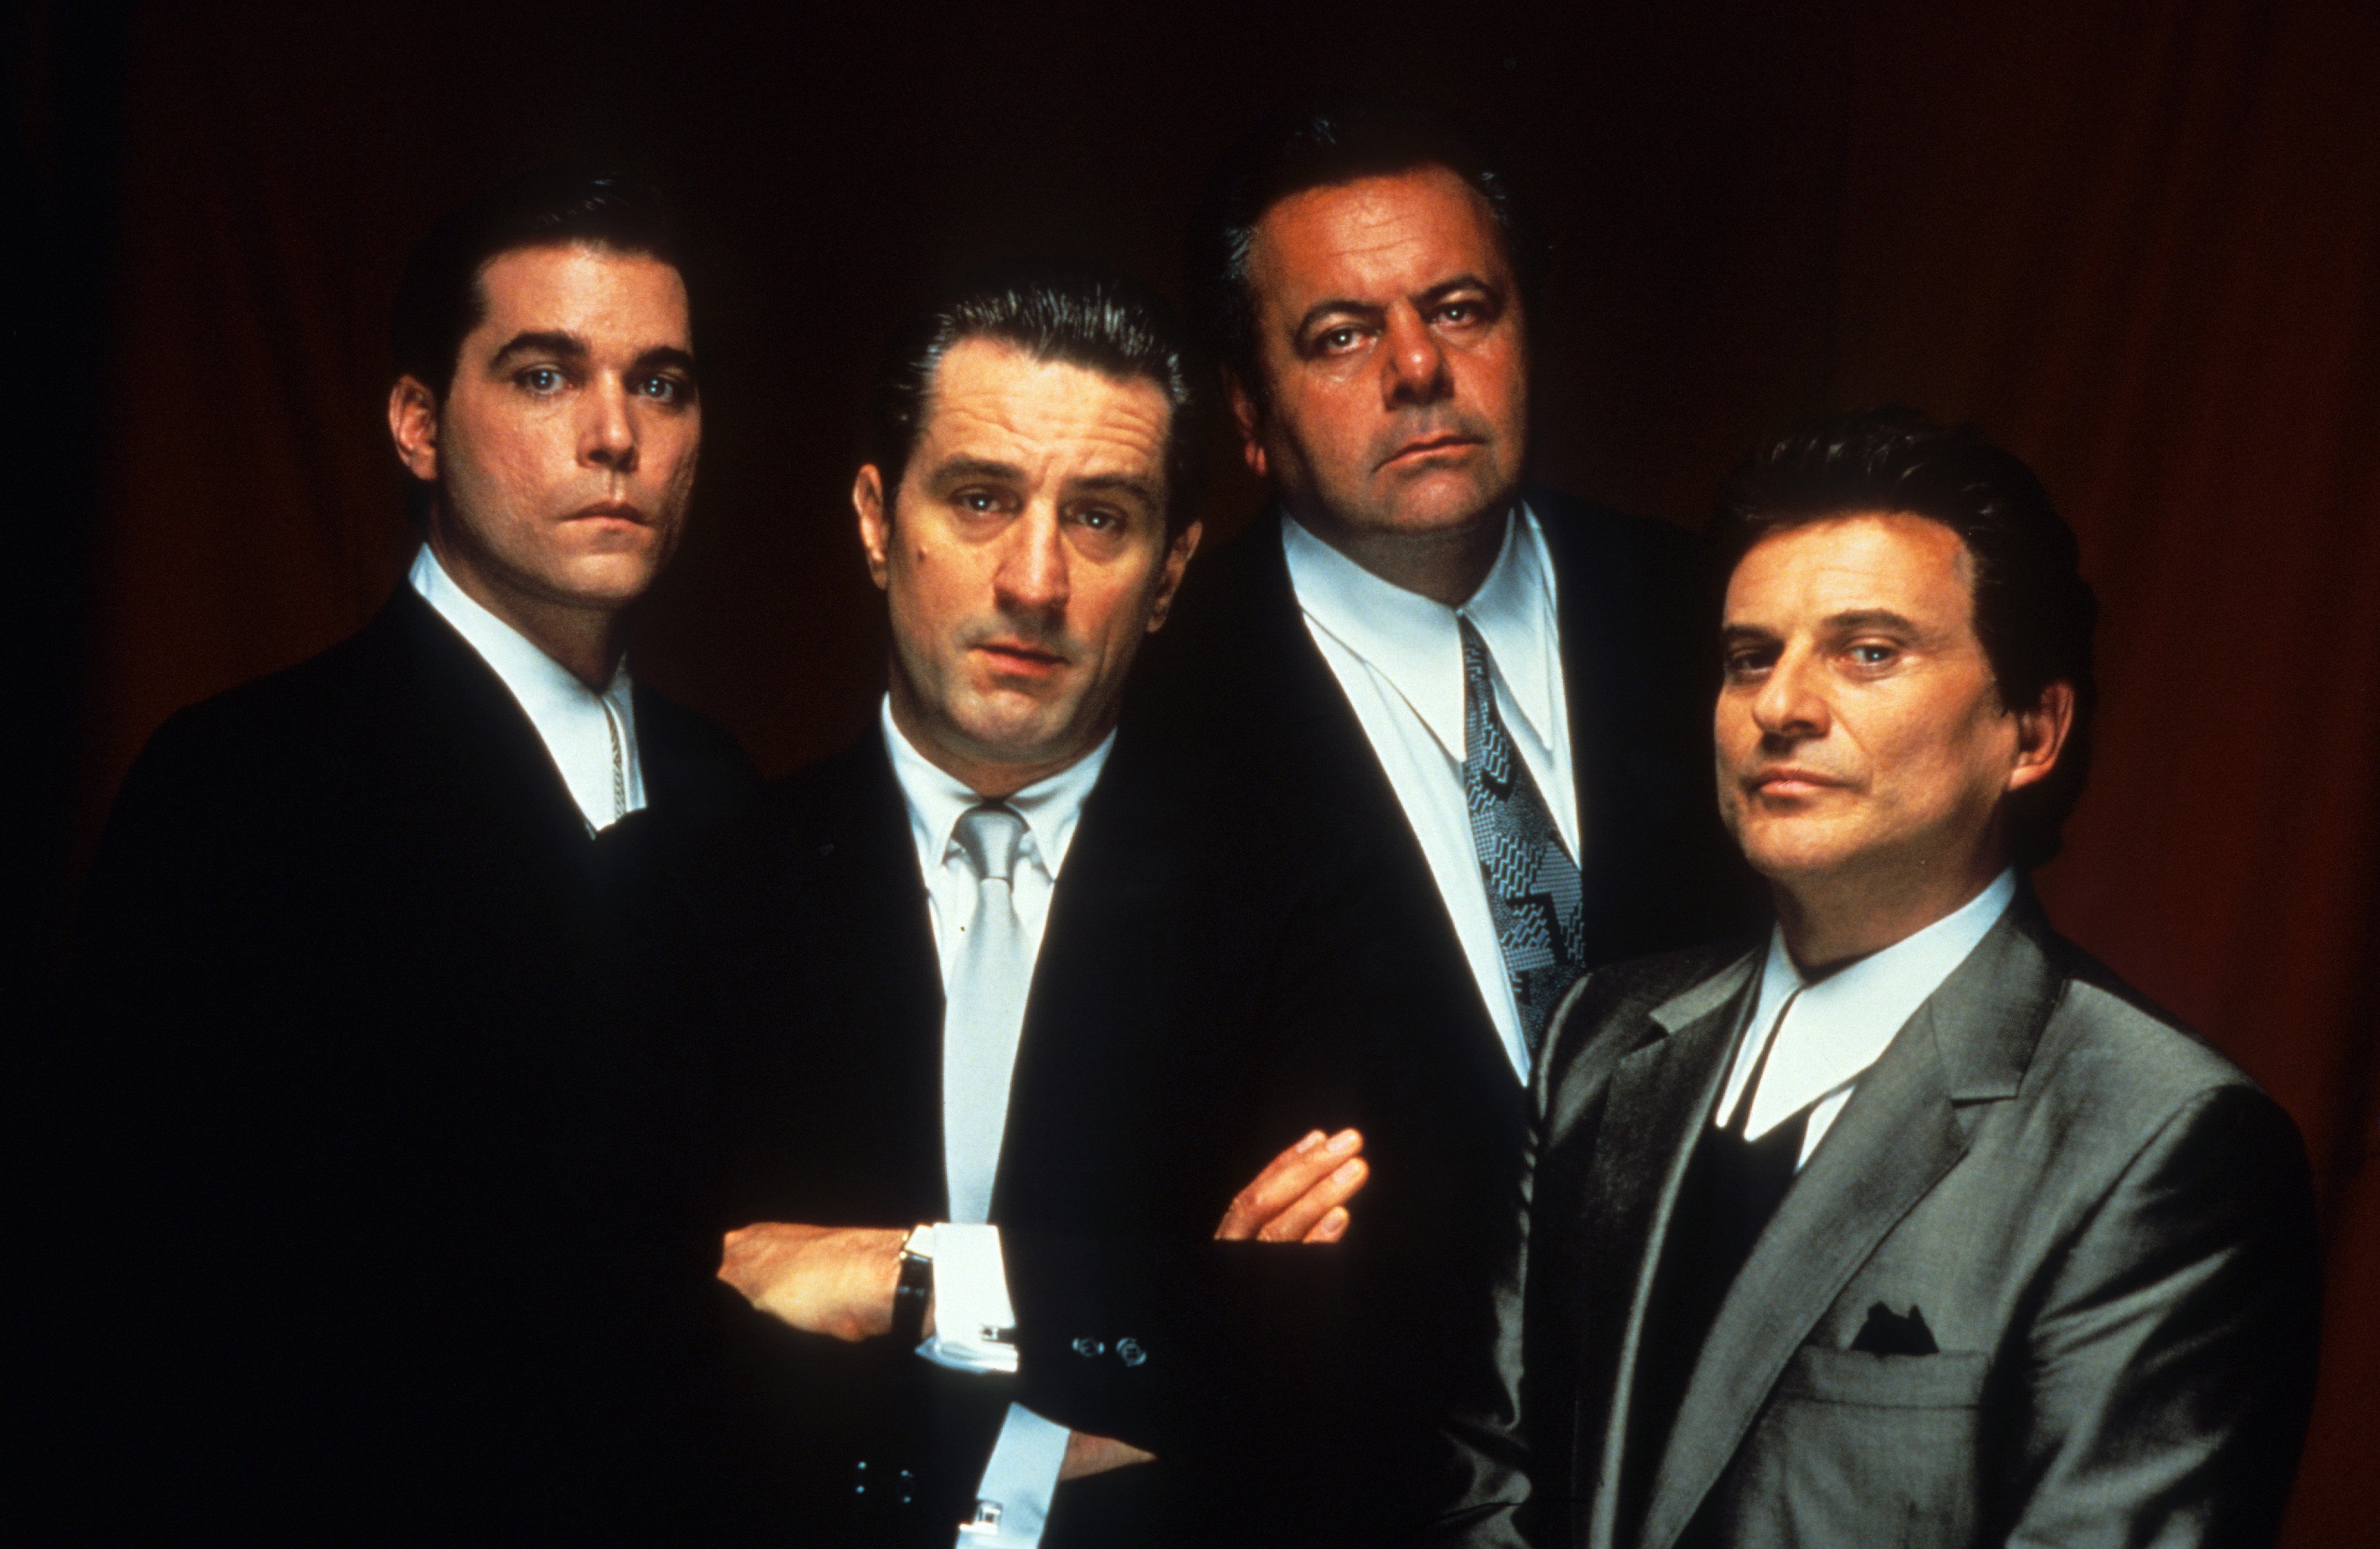 Ray Liotta, Robert De Niro, Paul Sorvino, and Joe Pesci pose for the film "Goodfellas," 1990. | Source: Getty Images